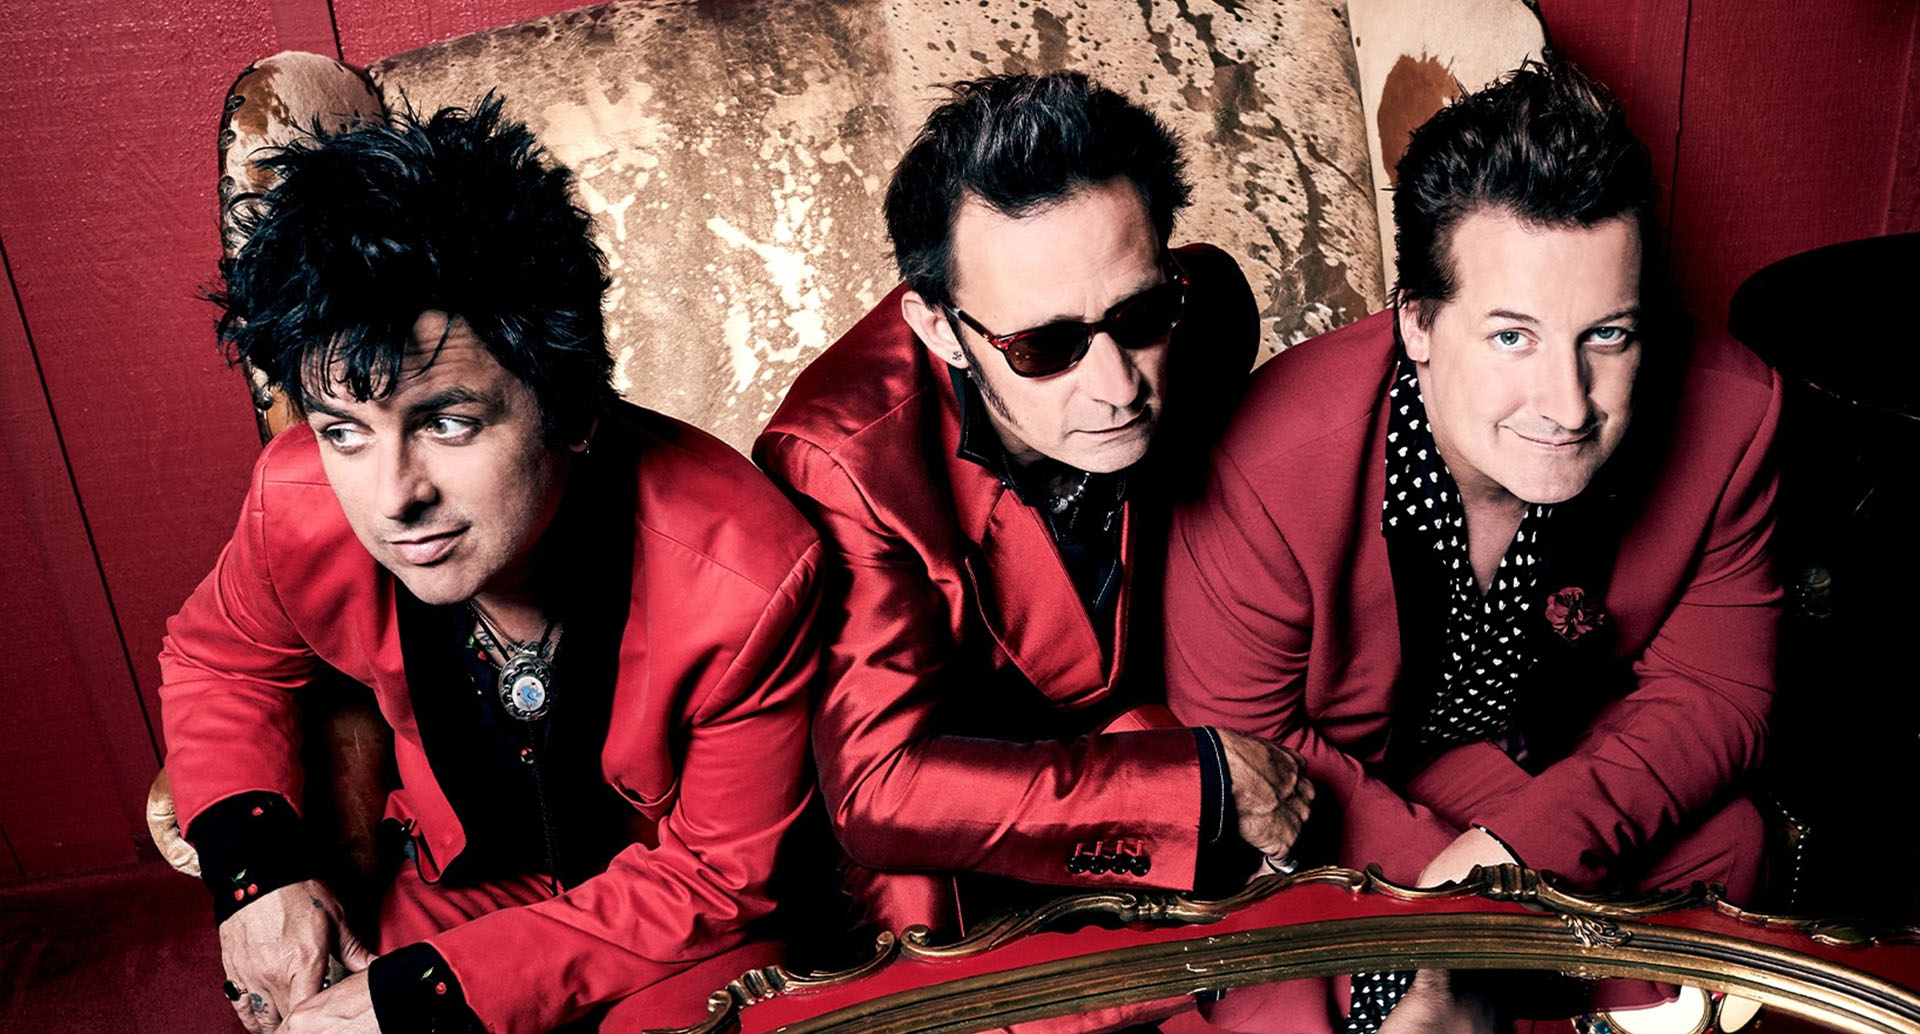  Green Day announces rescheduled Singapore concert date